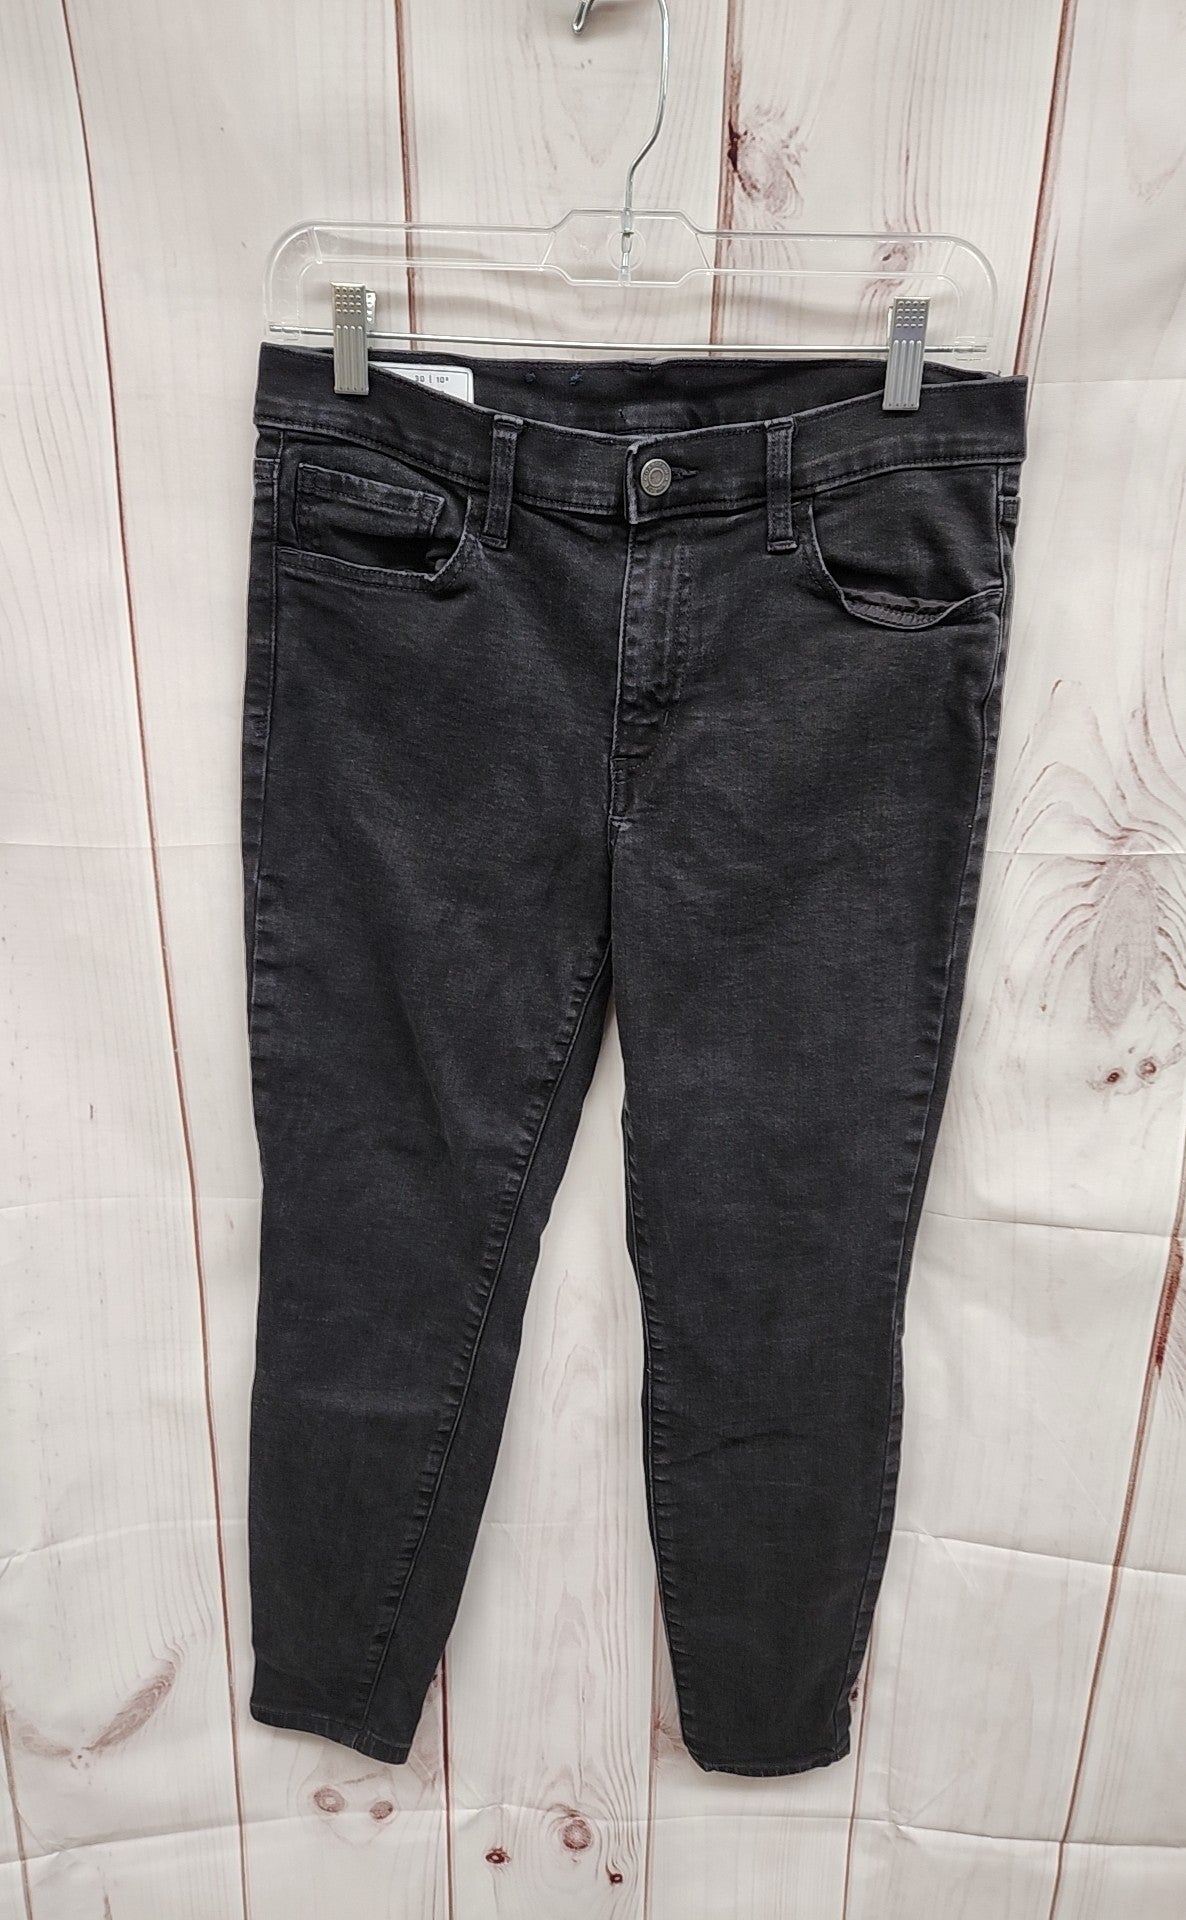 Gap Women's Size 30 (9-10) Jegging Mid Rise Black Jeans